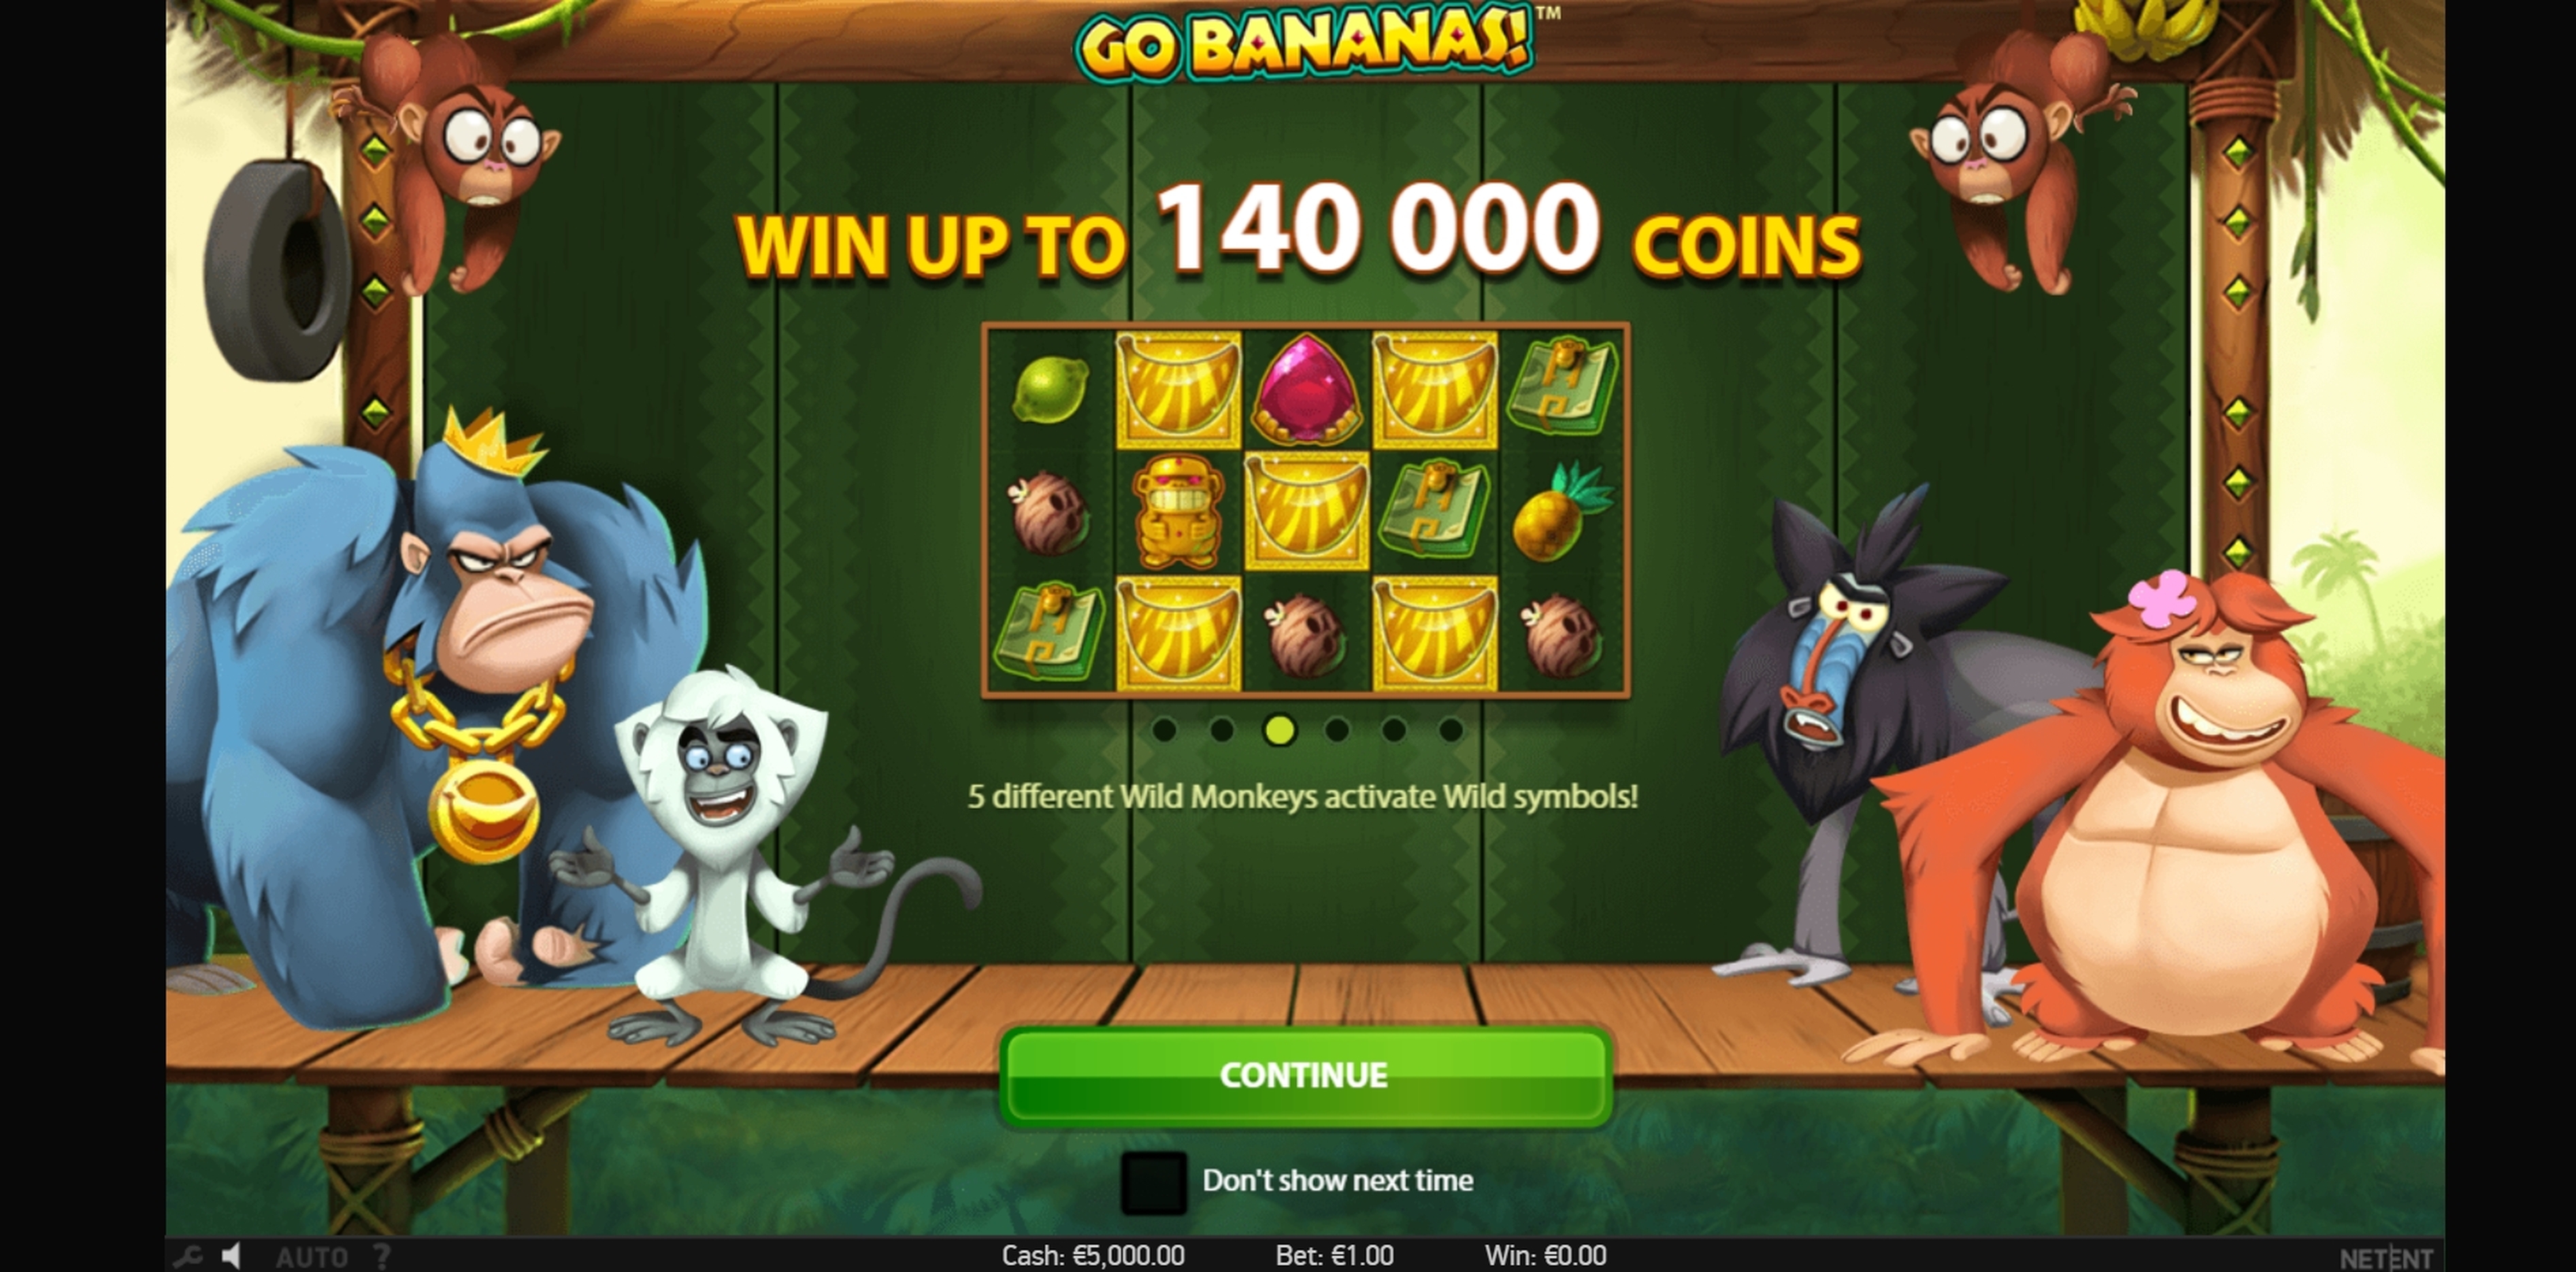 Play Go Bananas Free Casino Slot Game by NetEnt